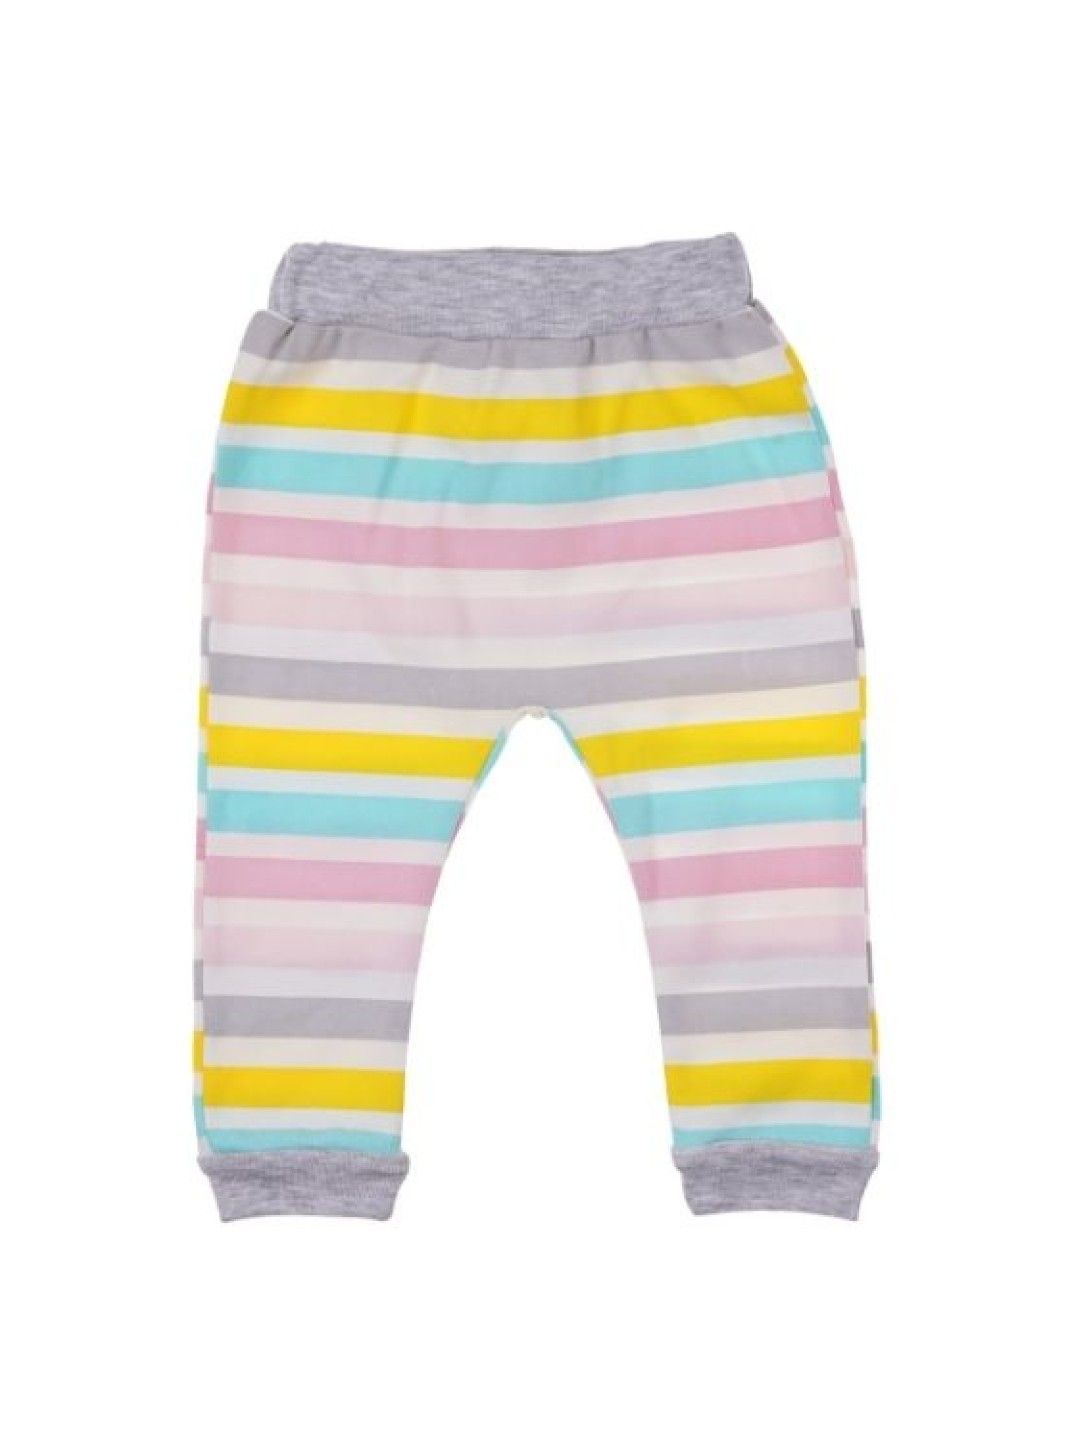 bean fashion Wogi Play Unicorn Pajama Set (Colored Stripes- Image 3)